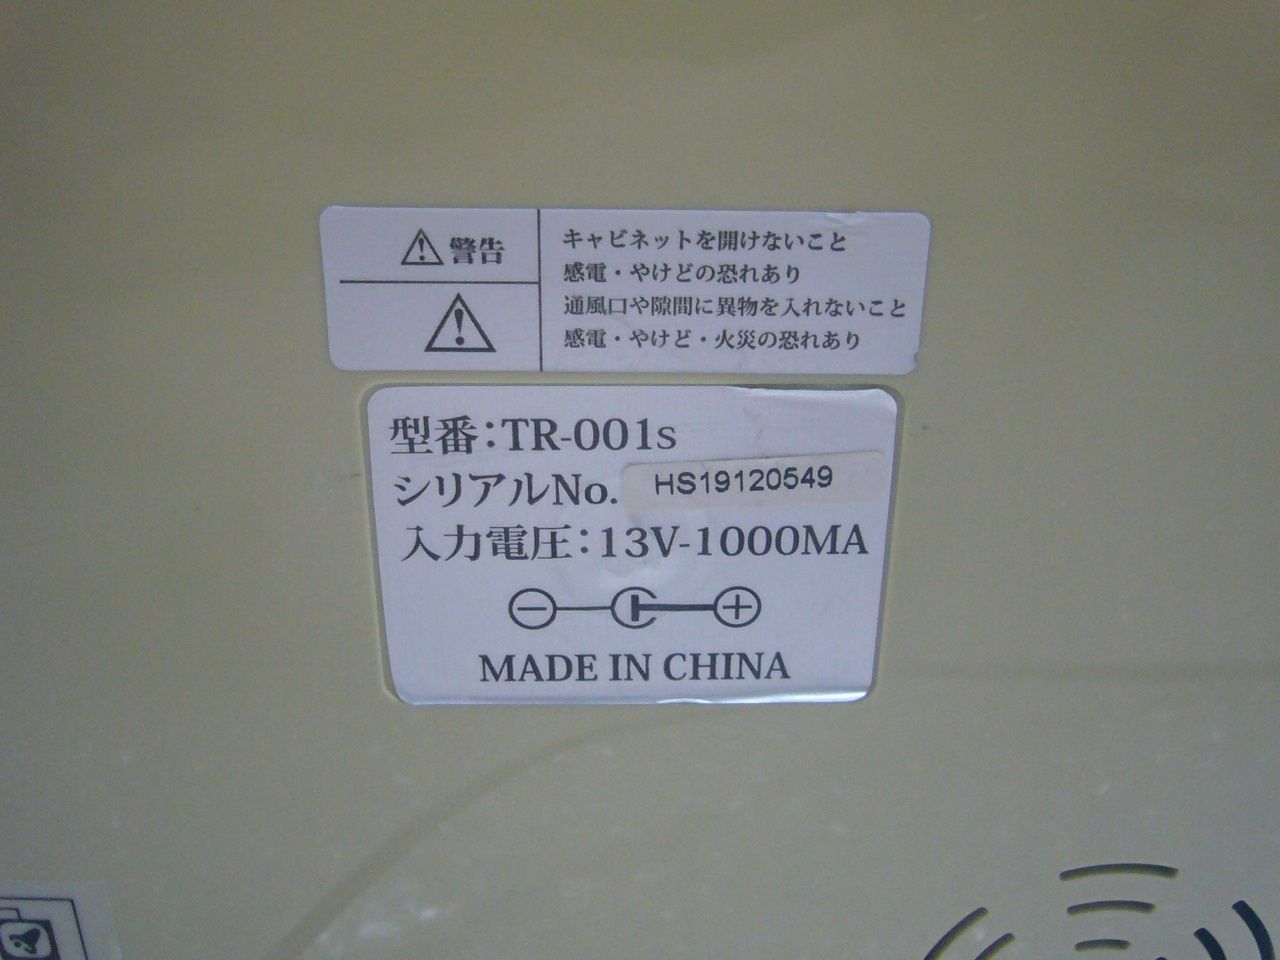 TOKAIZ タイムレコーダー タイムカード レコーダー 本体 タイムカード200枚付き TR-001s - 3